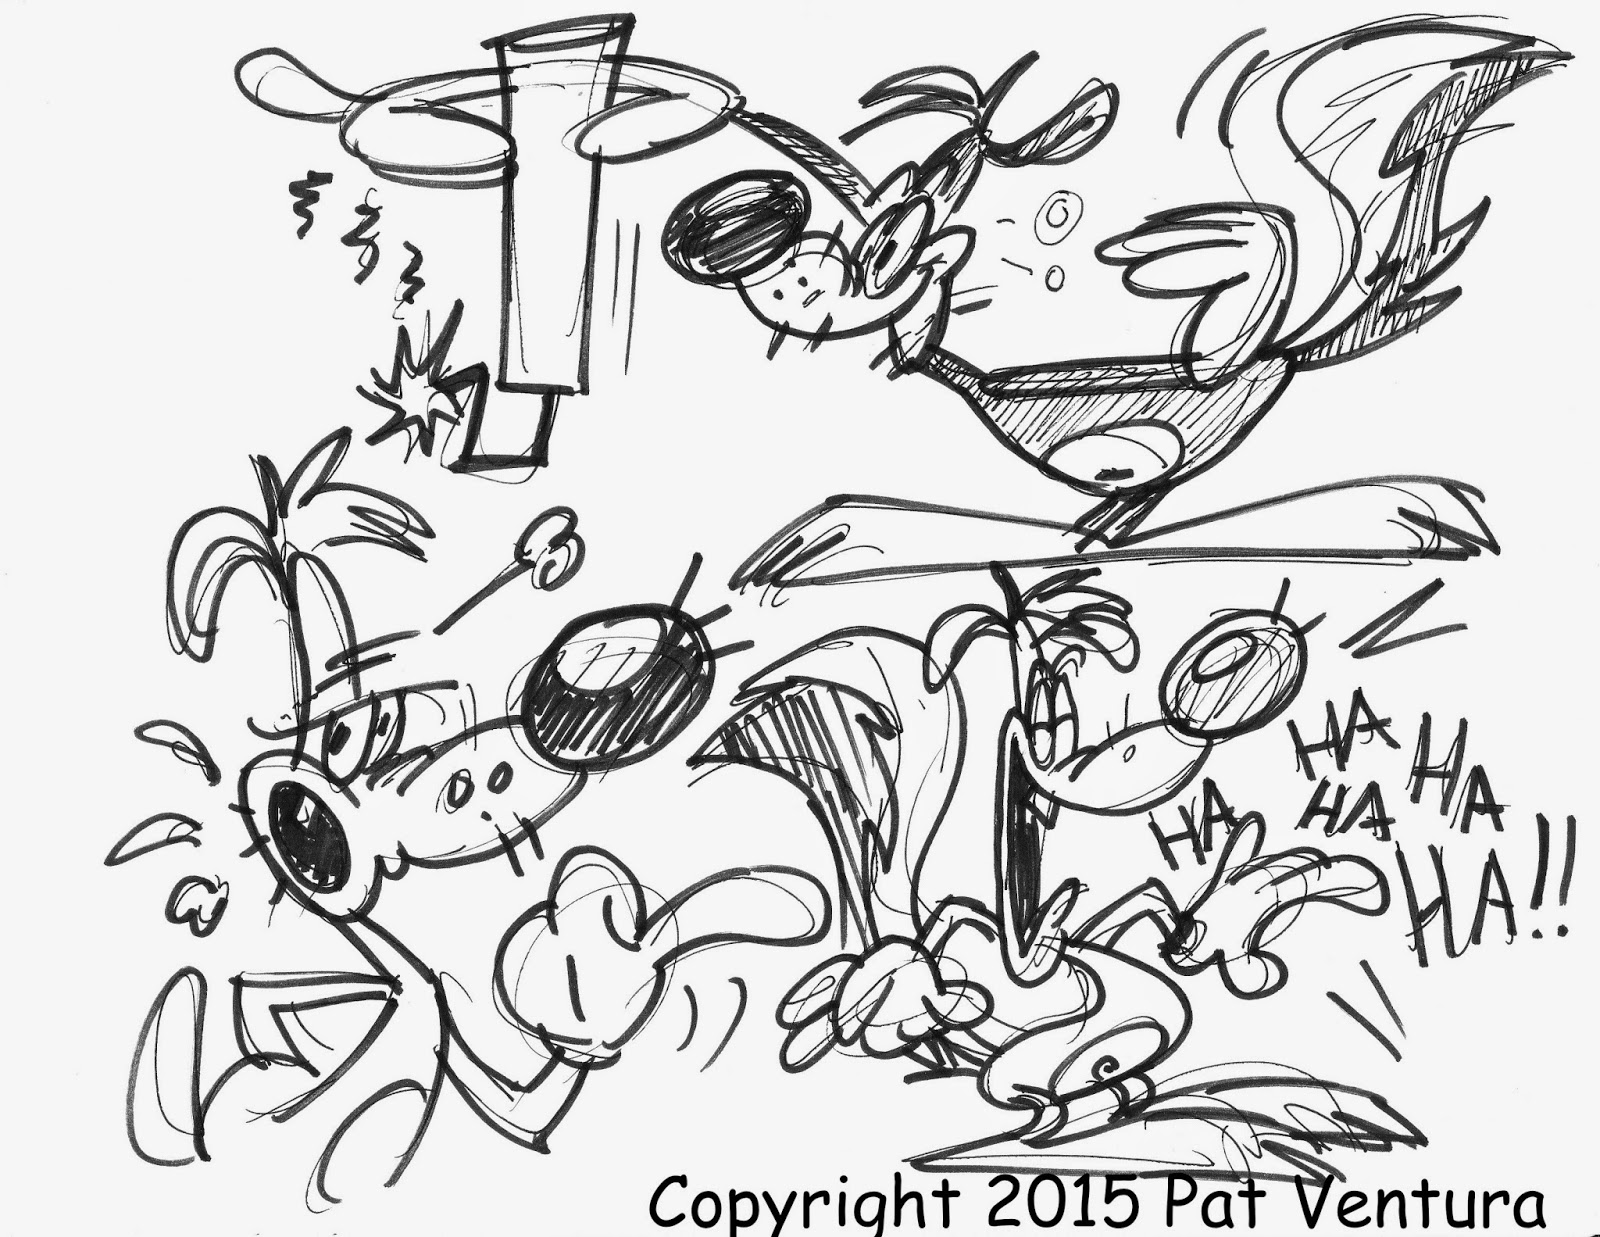 'Pat' Ventura's VenturaToons: Cartoons On The Loose